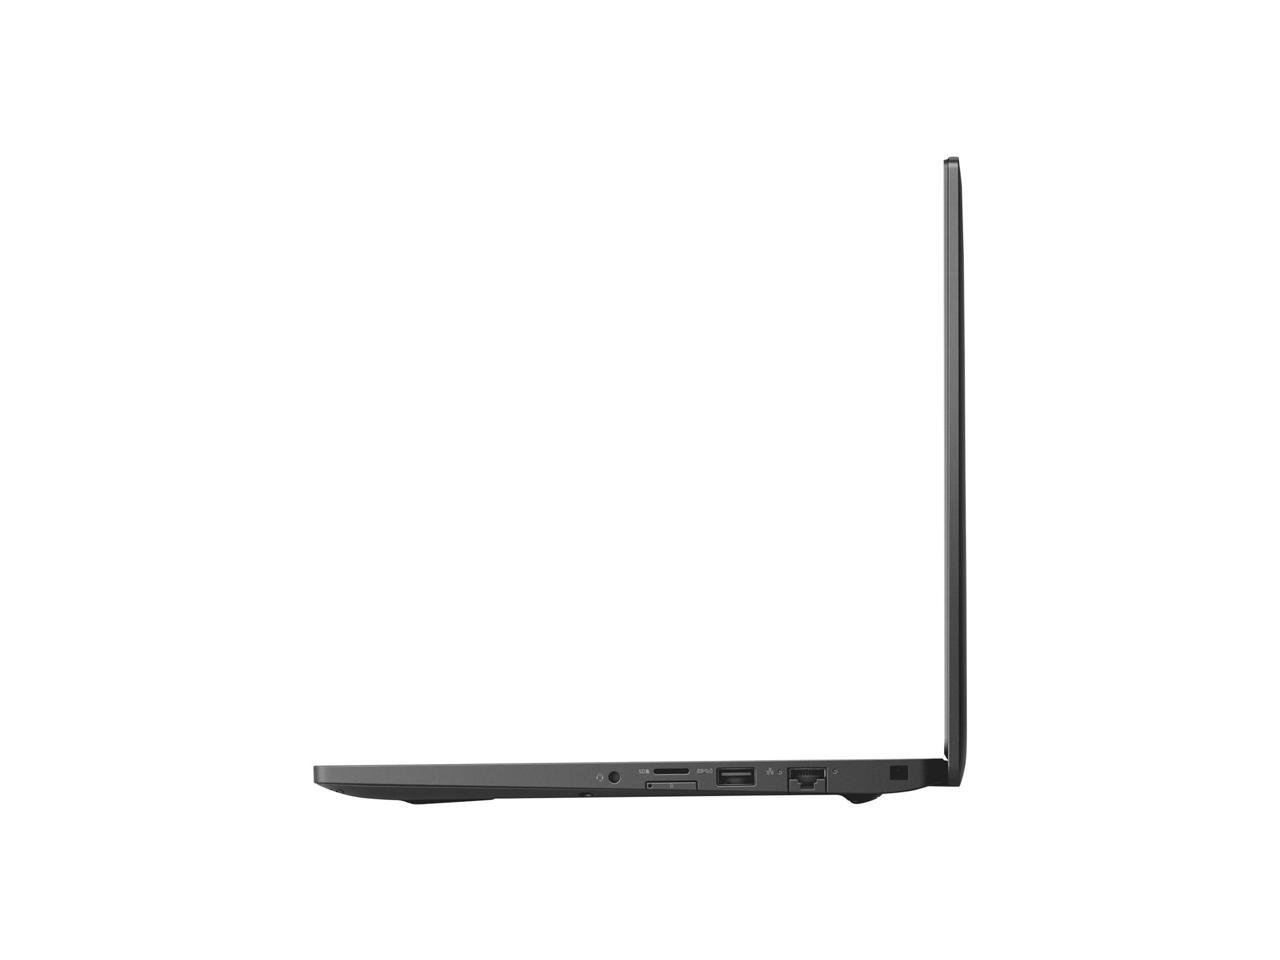 Dell Latitude 7280 12.5" Laptop, Intel Core i5 6300U 2.4Ghz, 8GB DDR4, 256GB NVMe PCIe M.2 SSD, USB Type-C, HDMI, Webcam, Windows 10 Pro x64